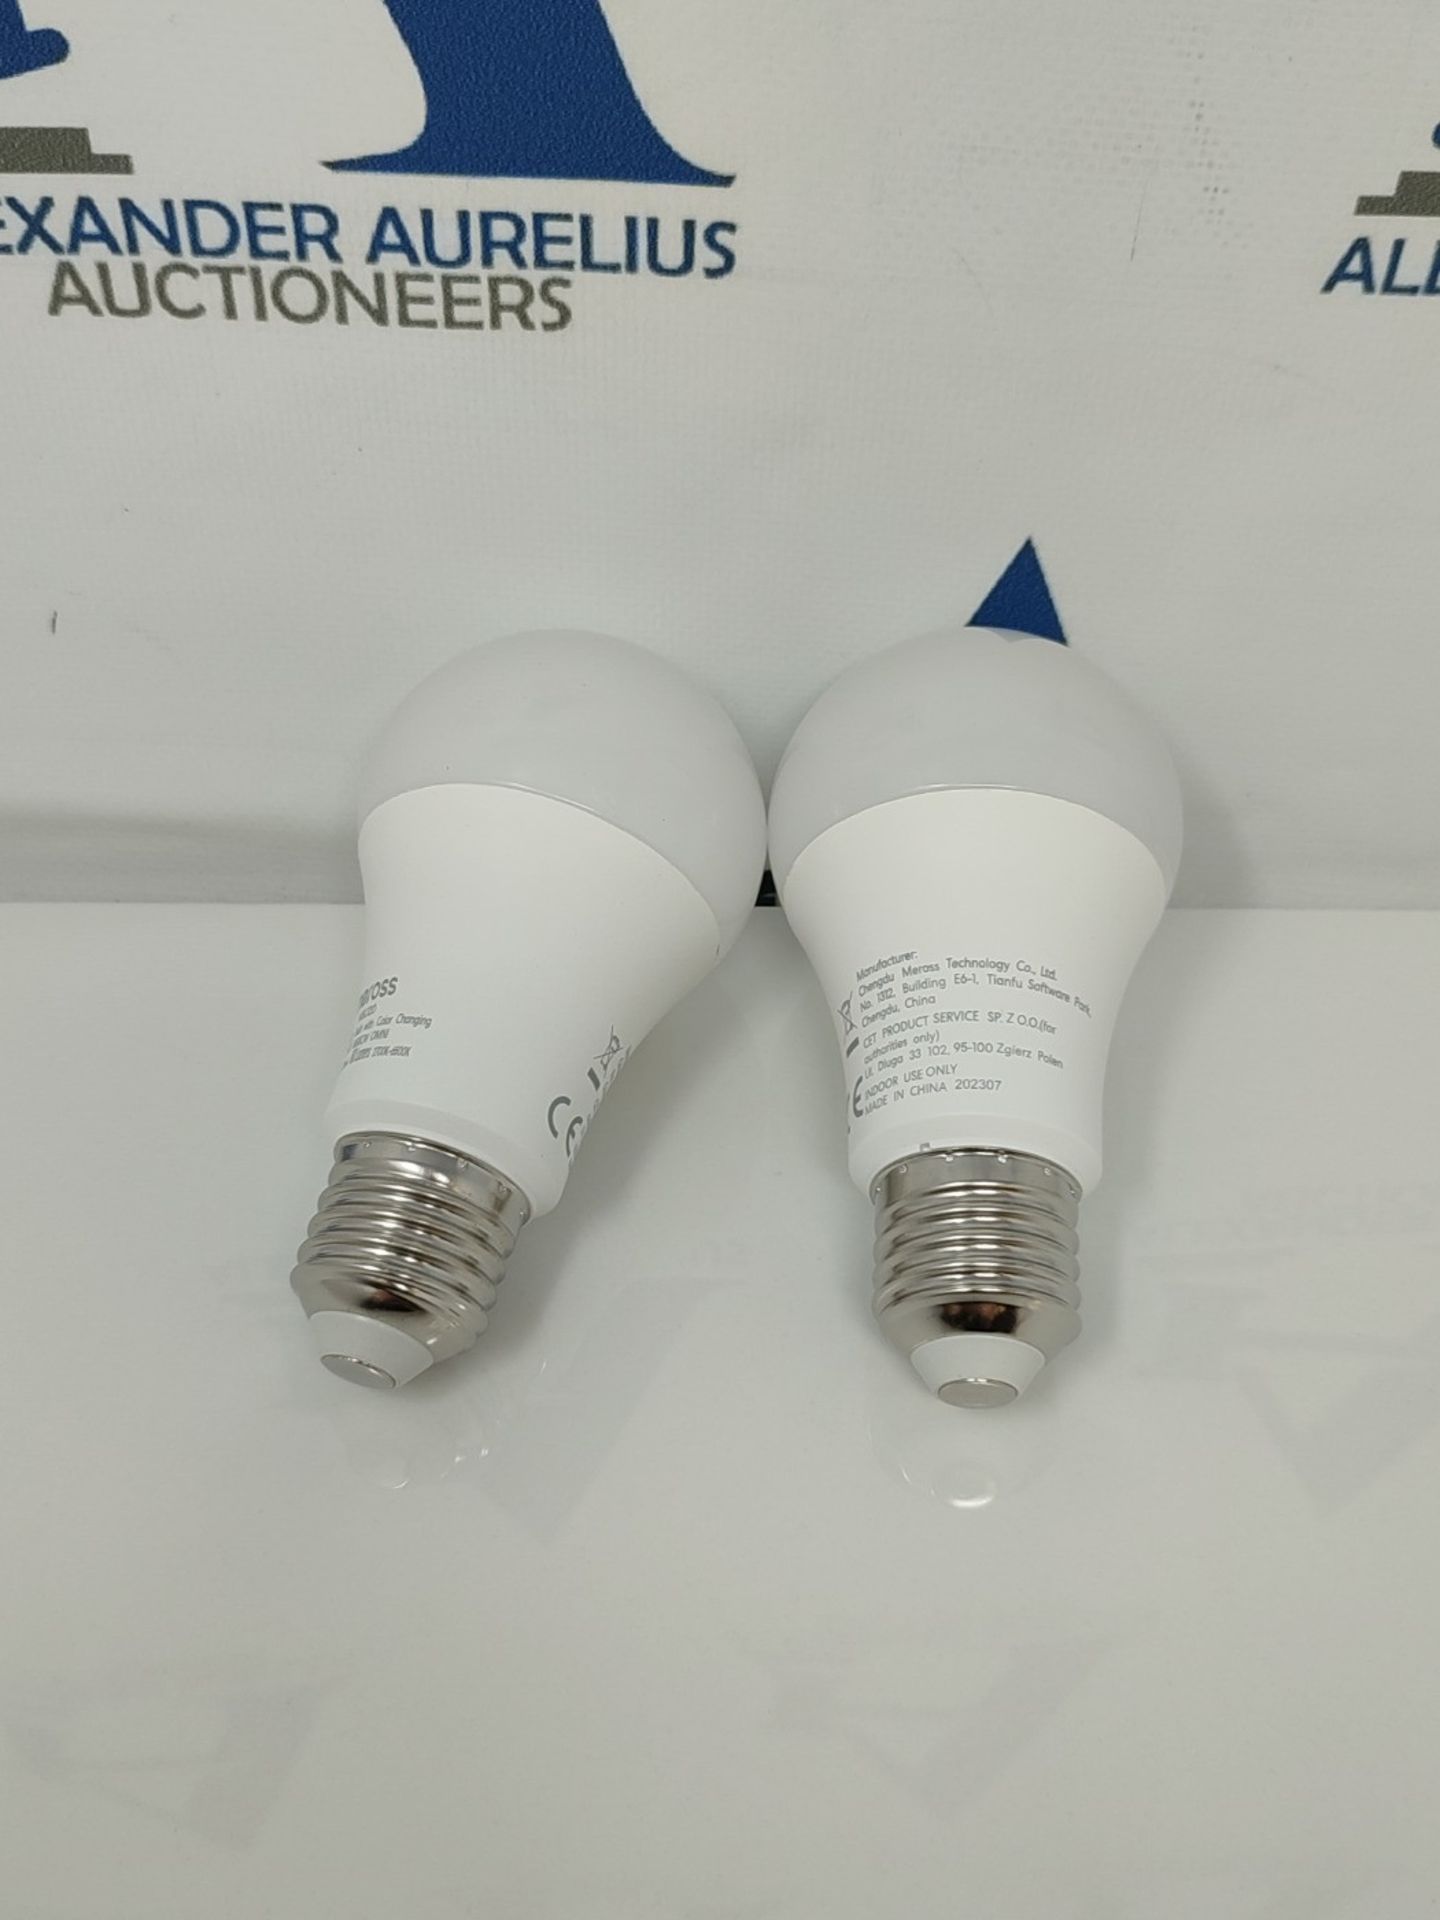 meross Smart Bulb E27, 9W, Alexa Light Bulbs That Work with Alexa, Google and SmartThi - Image 2 of 2